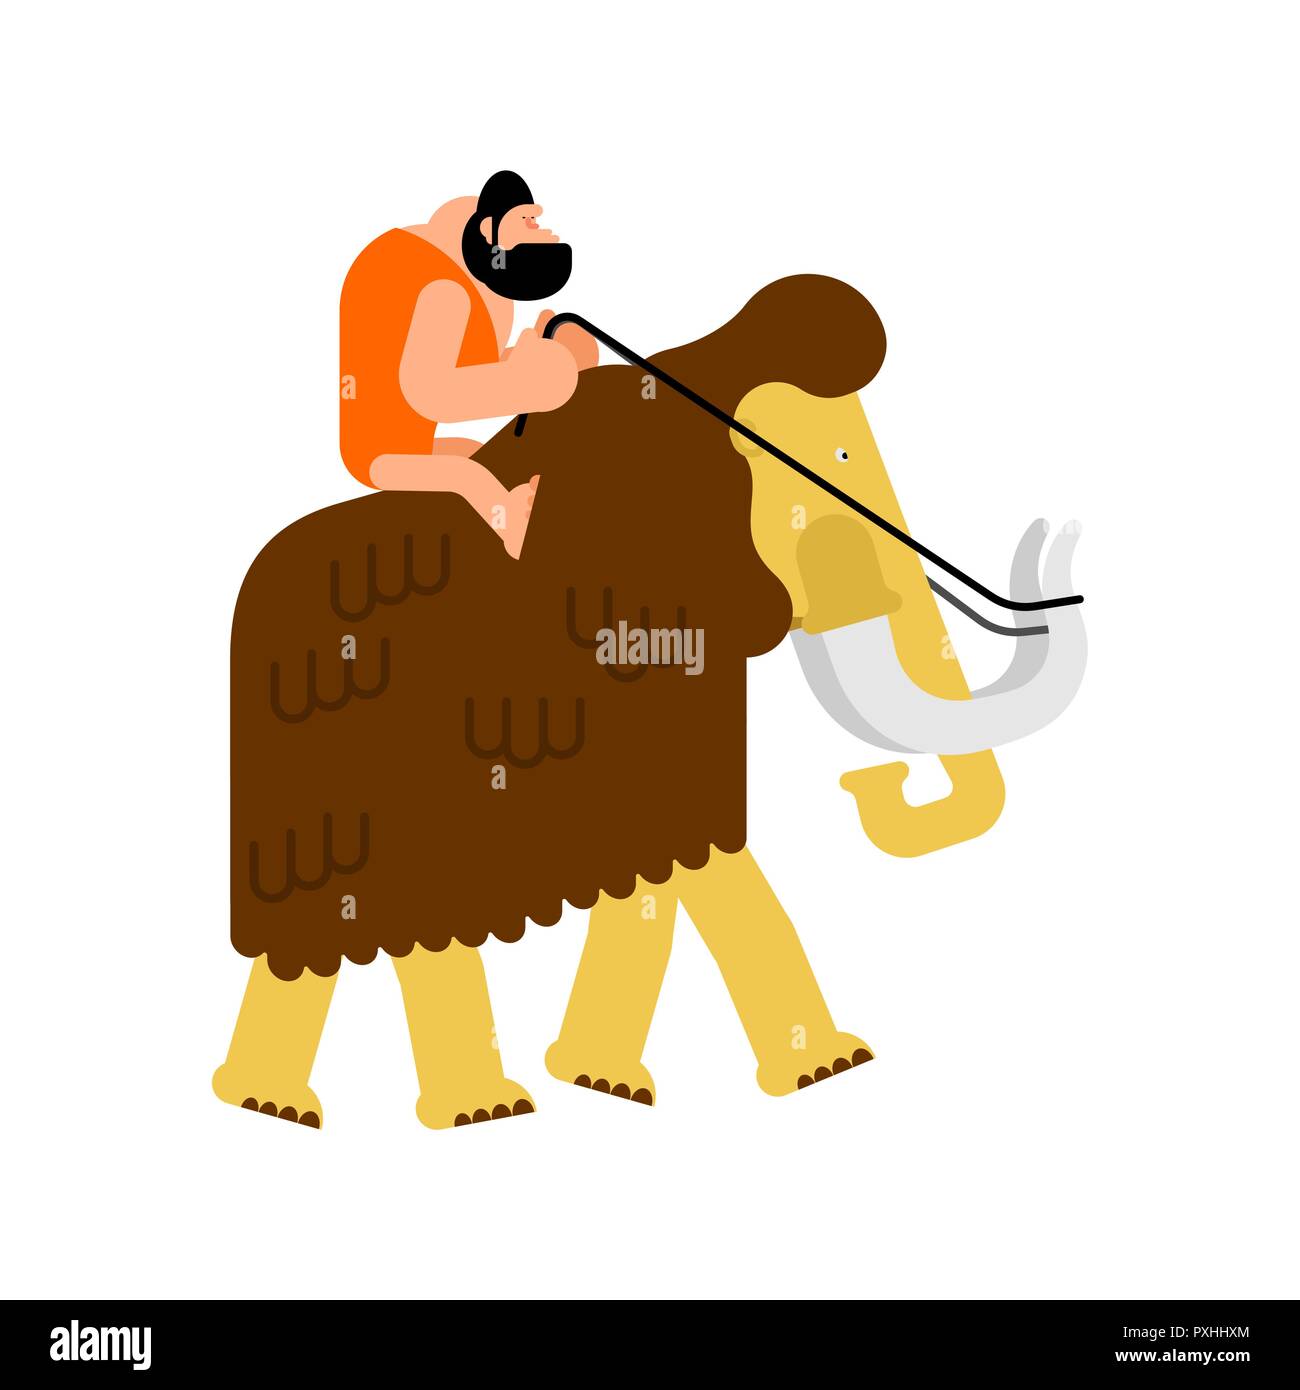 Caveman on mammoth. Prehistoric man saddled animal transport